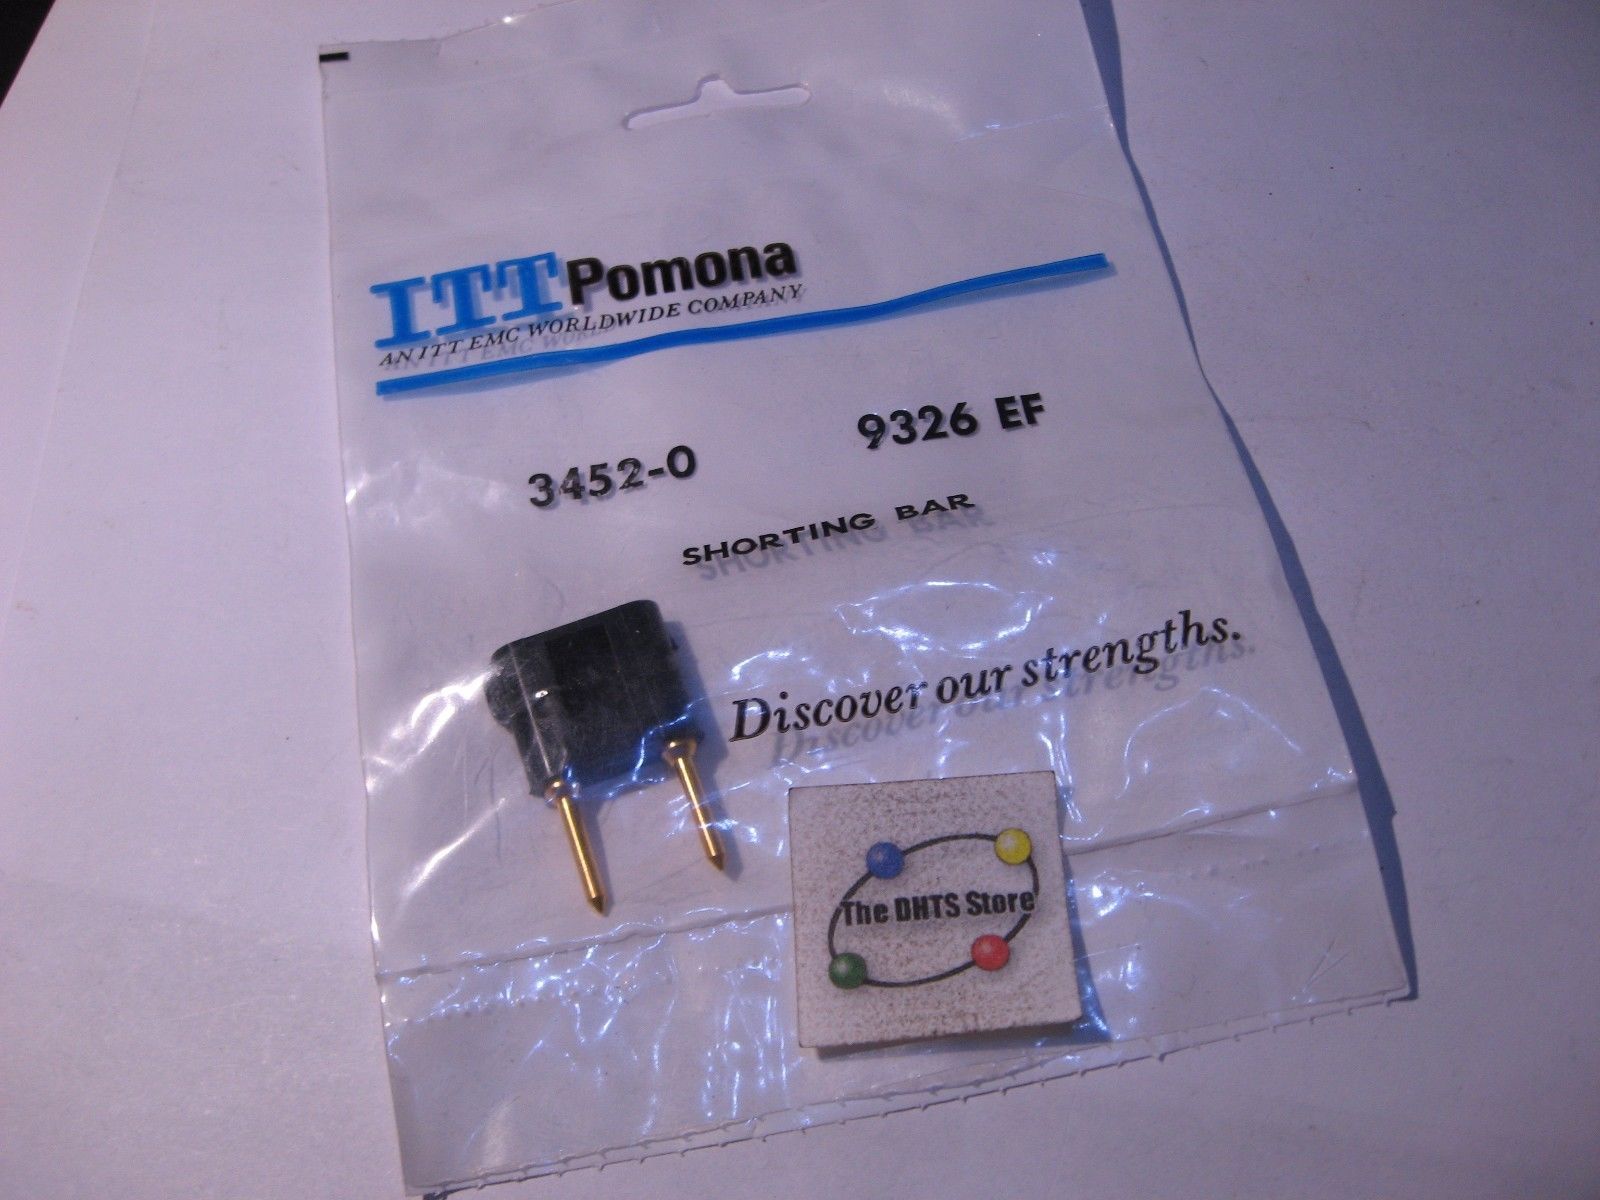 Shorting Bar ITT Pomona 3452-0 9326-EF Test Cable Black Plastic - NOS Qty 1 - $5.69